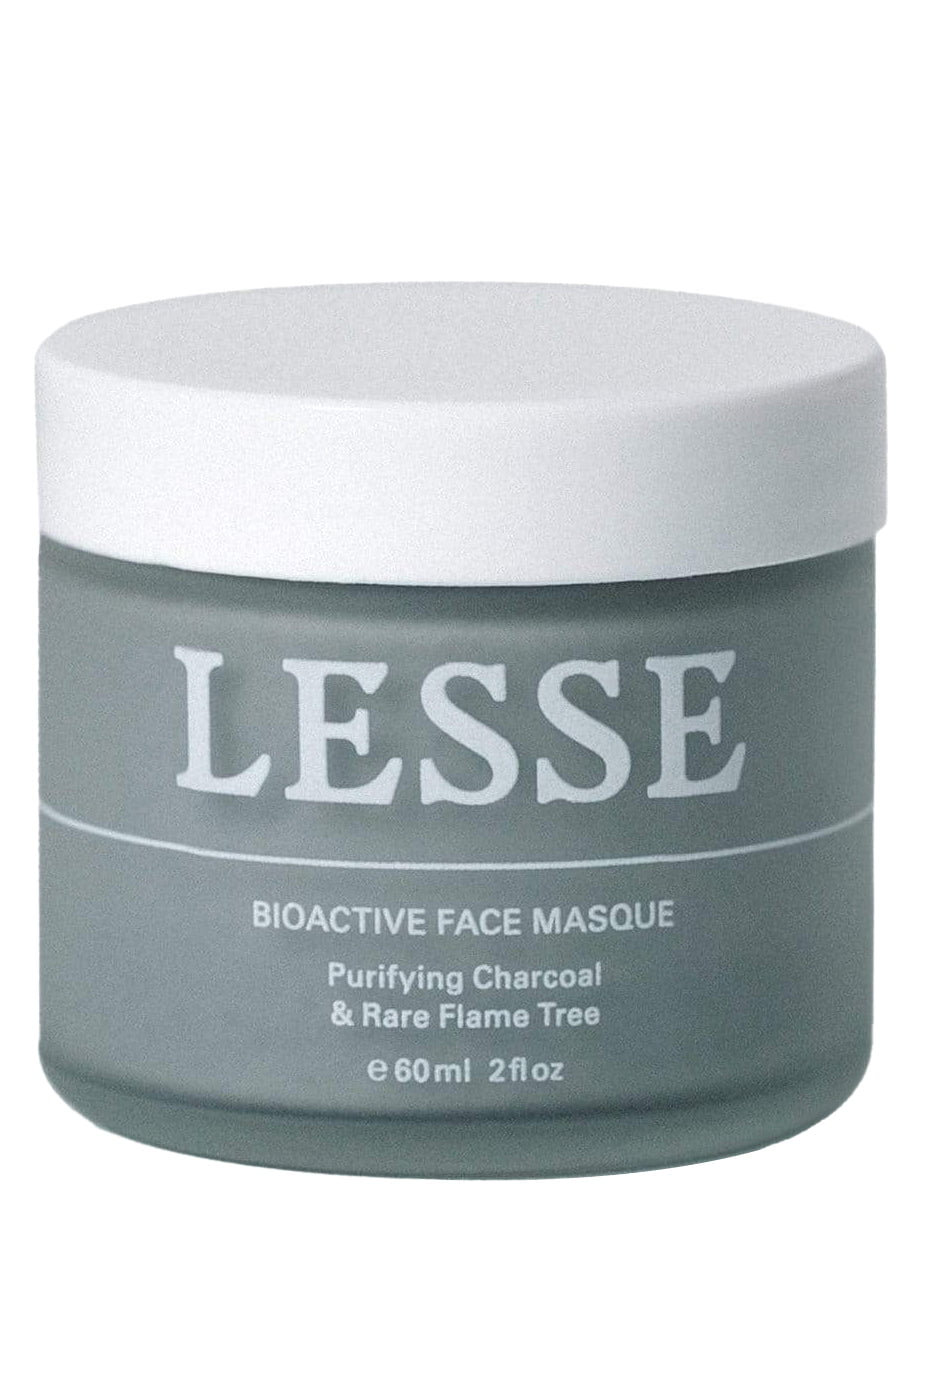 LESSE-Bioactive Face Masque 2oz-2 OZ